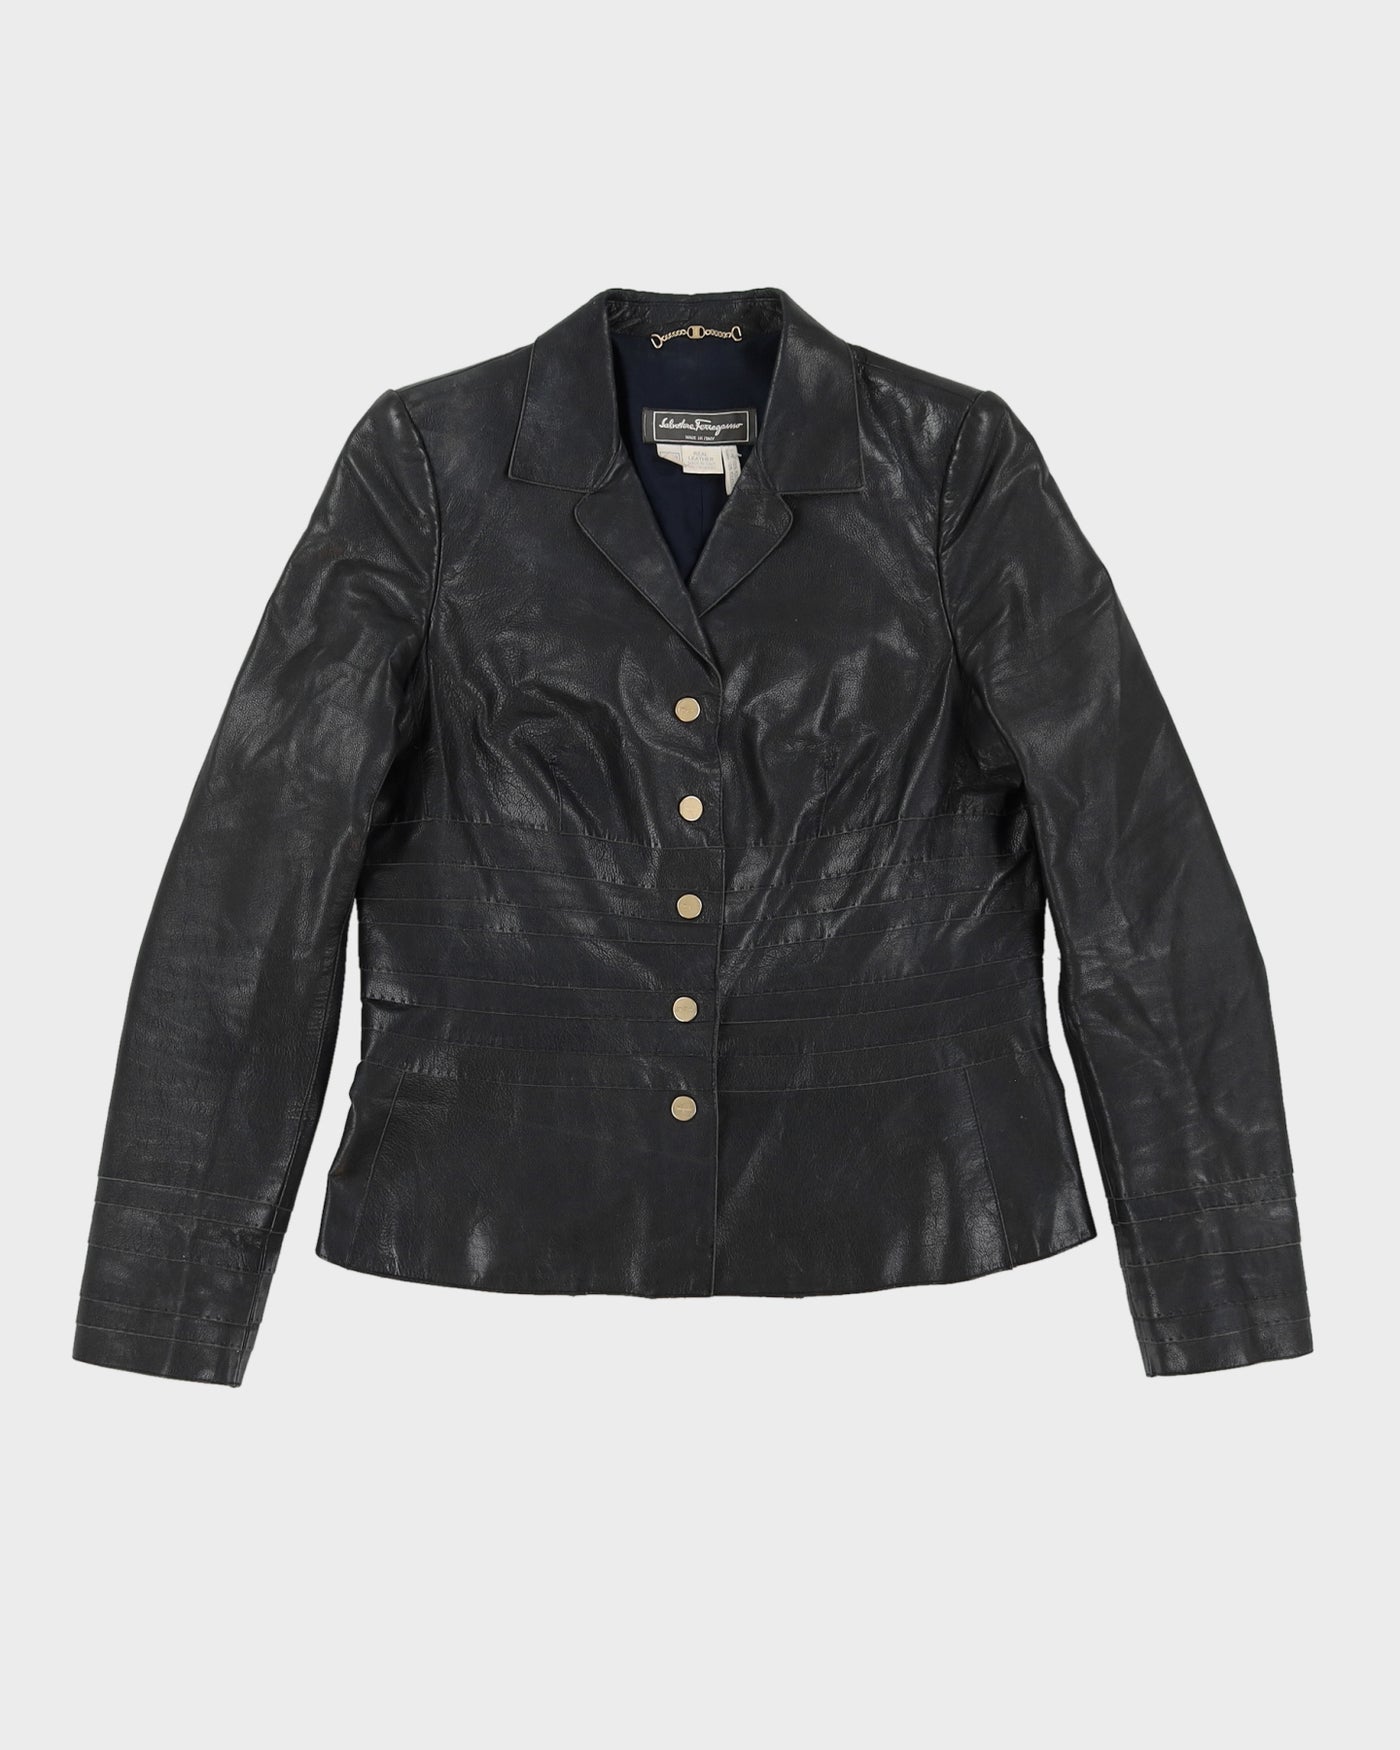 Vintage 1990s Salvatore Ferragamo Navy Leather Jacket - S